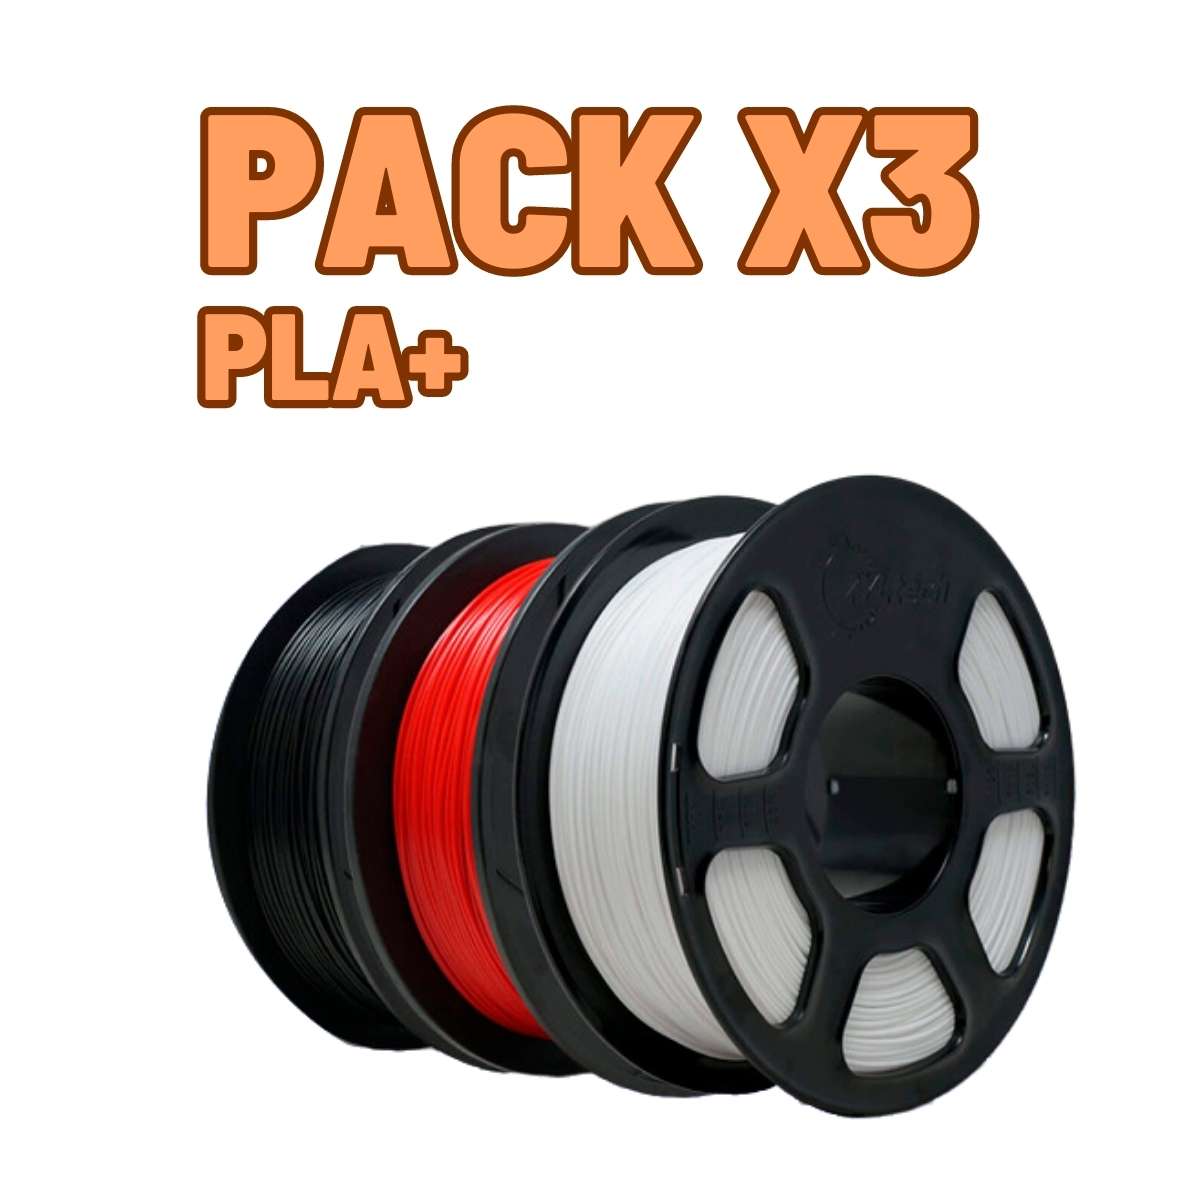 10 x 1kg Premium PLA+ Filament Pack, Free Shipping